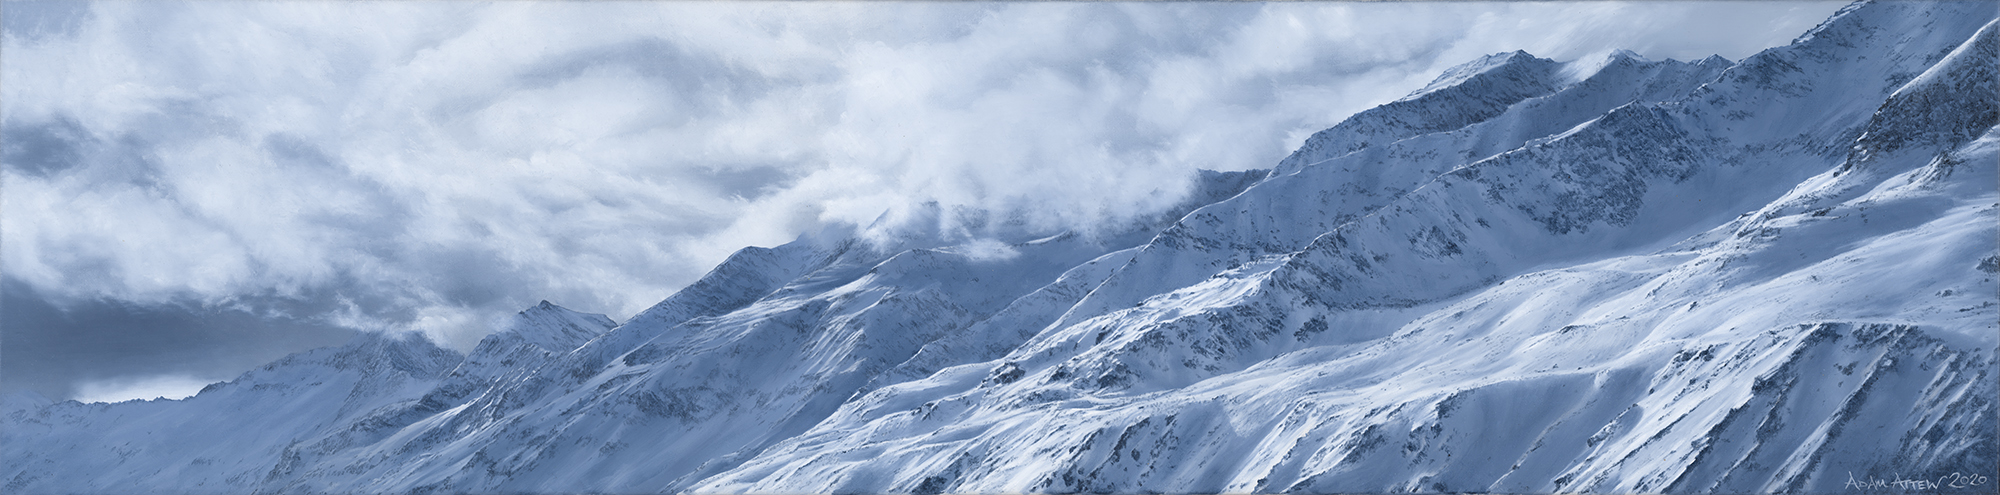 Austria Obergurgl Attew Painting Landscape artist art ski snowboard mountain winter Snow Alpine Alps Montagne Alpes